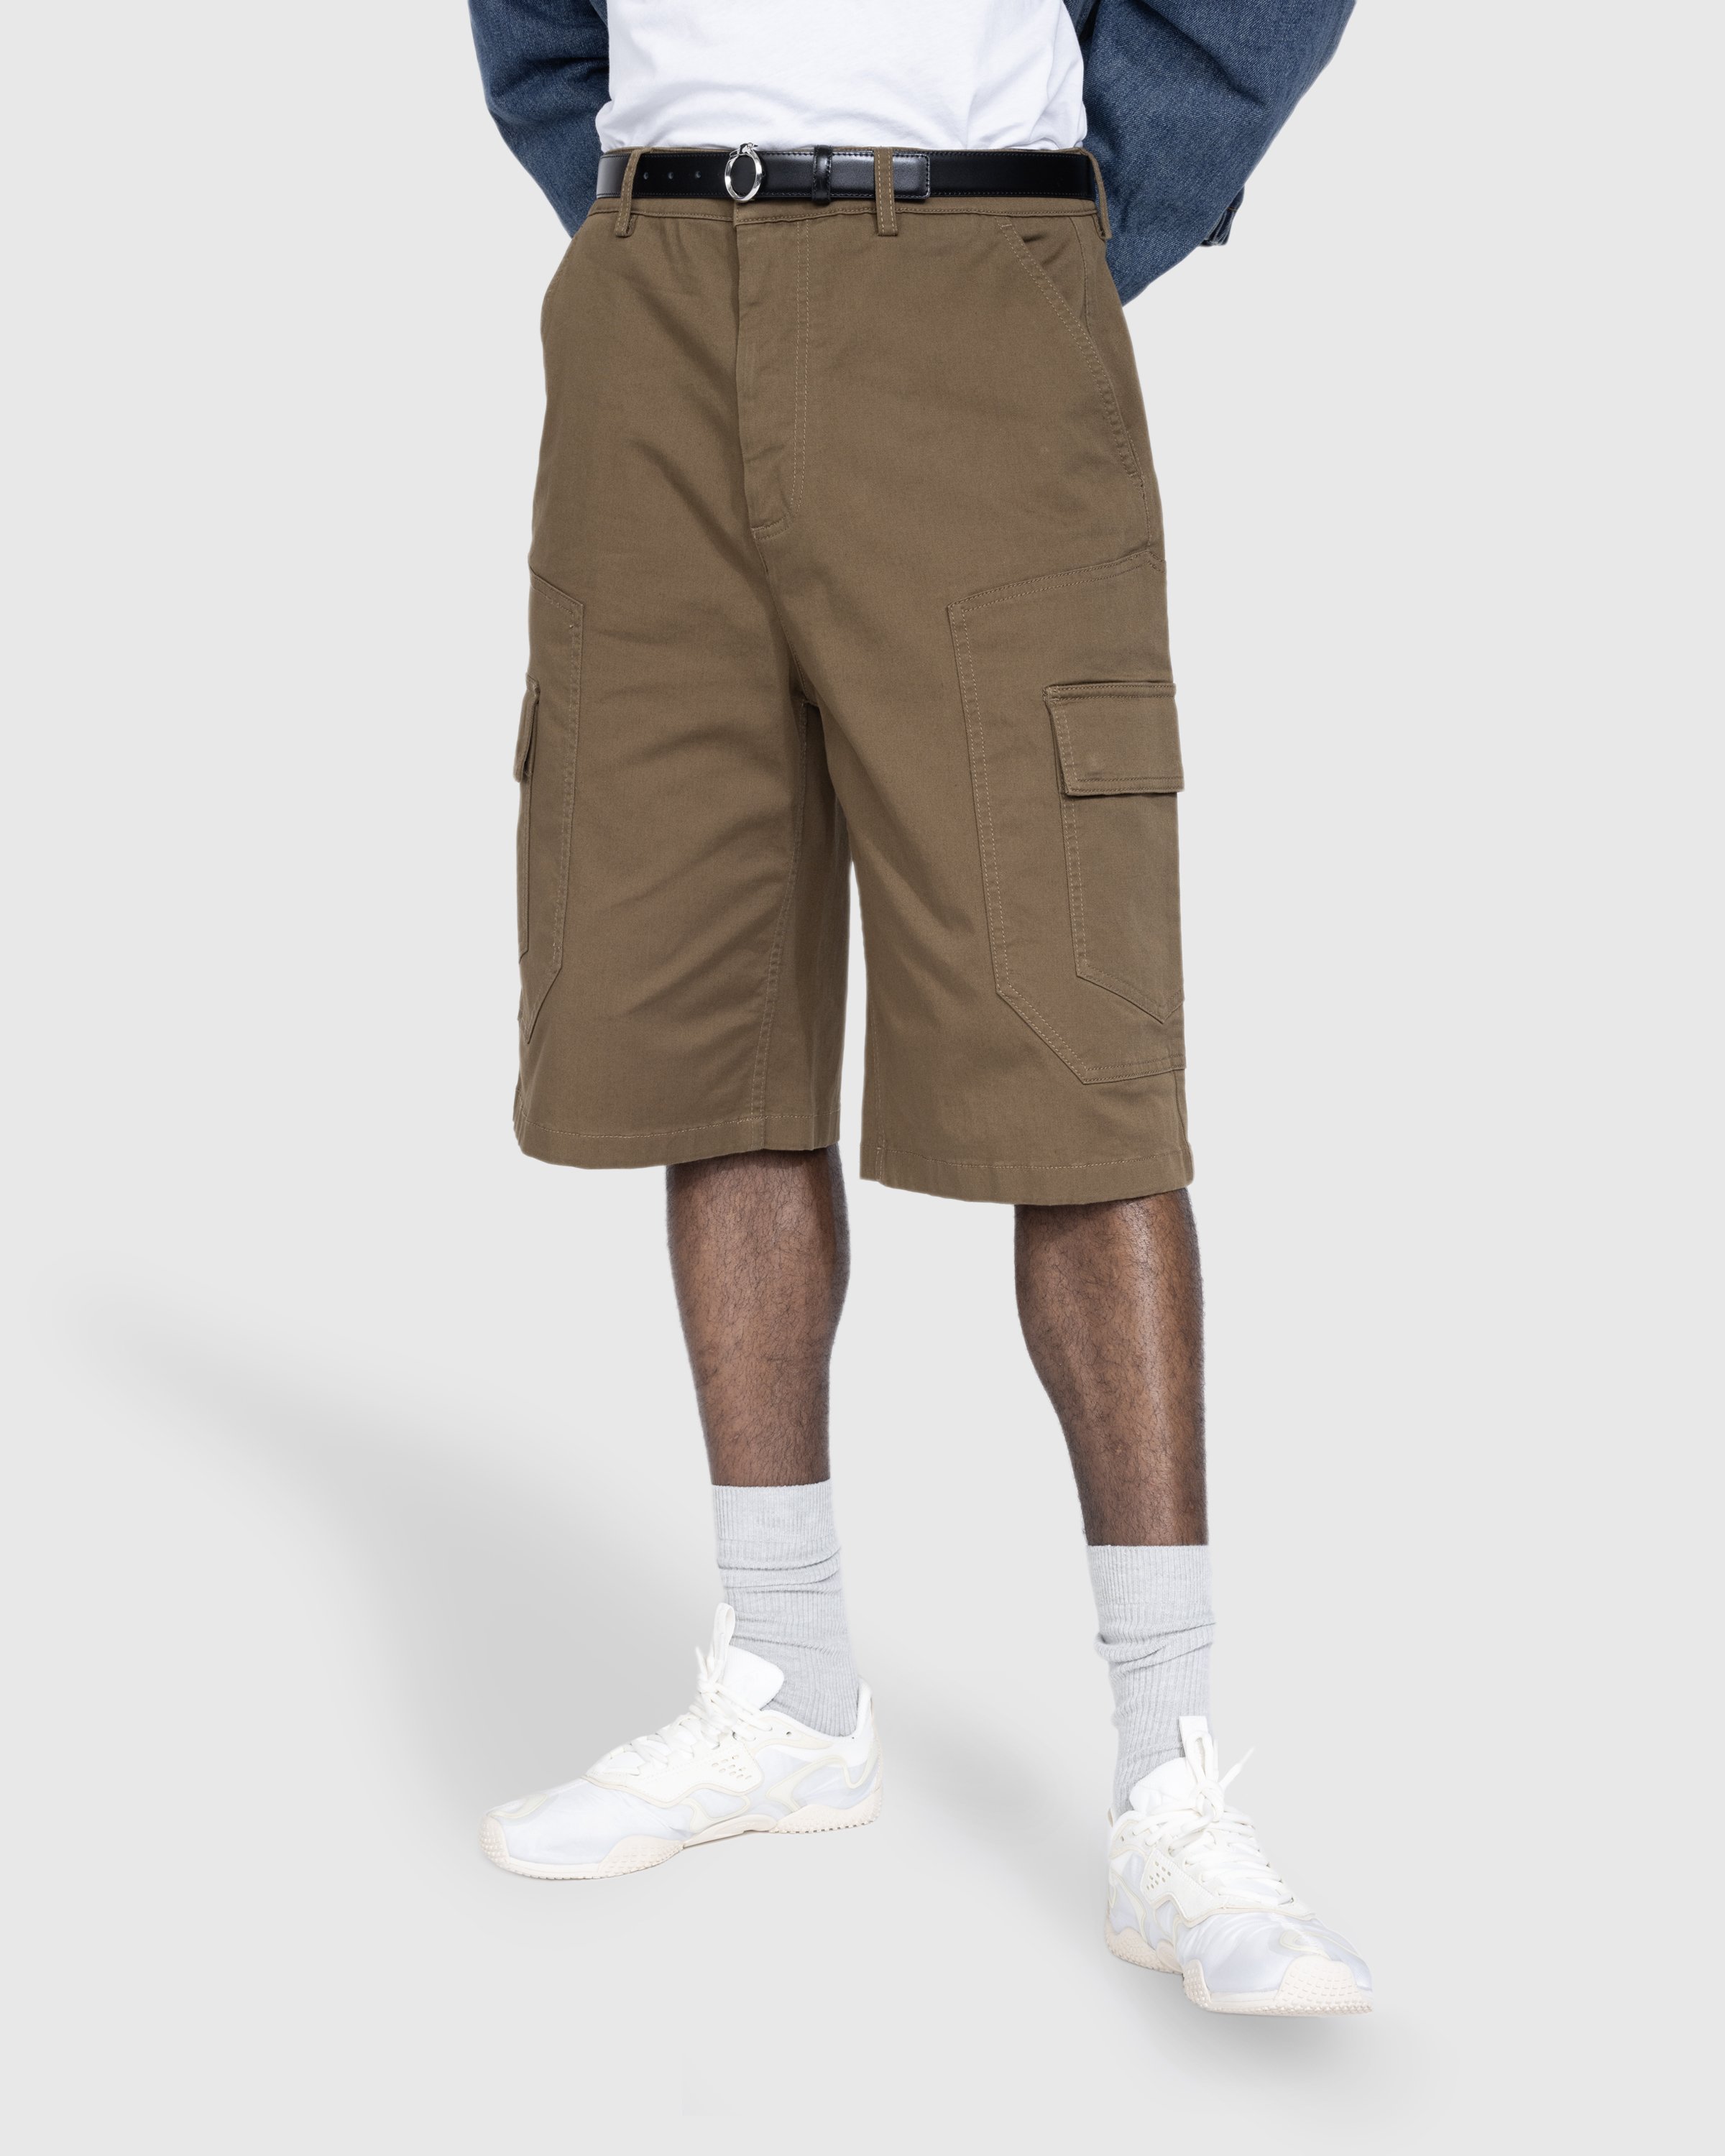 Trussardi - Trouser Shorts Gabardine Piece Dyed - Clothing - Brown - Image 2